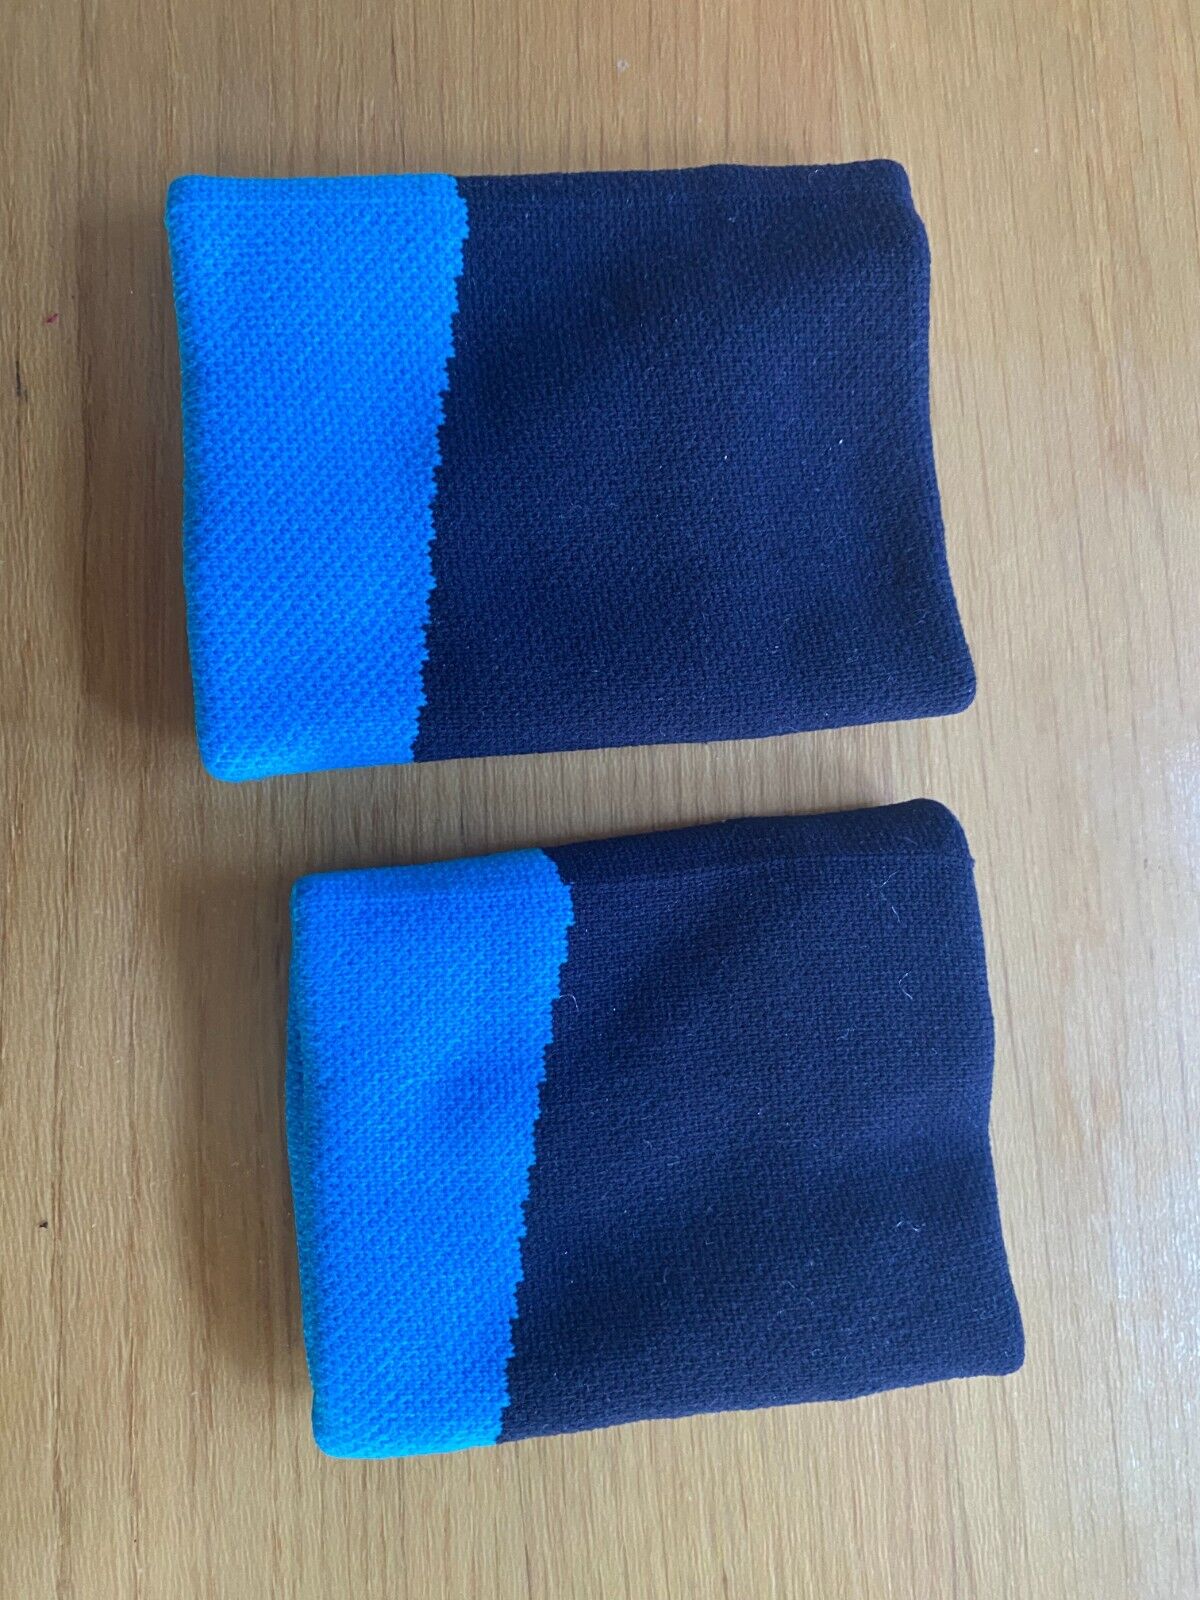 Volkl Pair 5 Inch Tennis Wrist Bands VT 5207 Navy Blue  Super absorbent